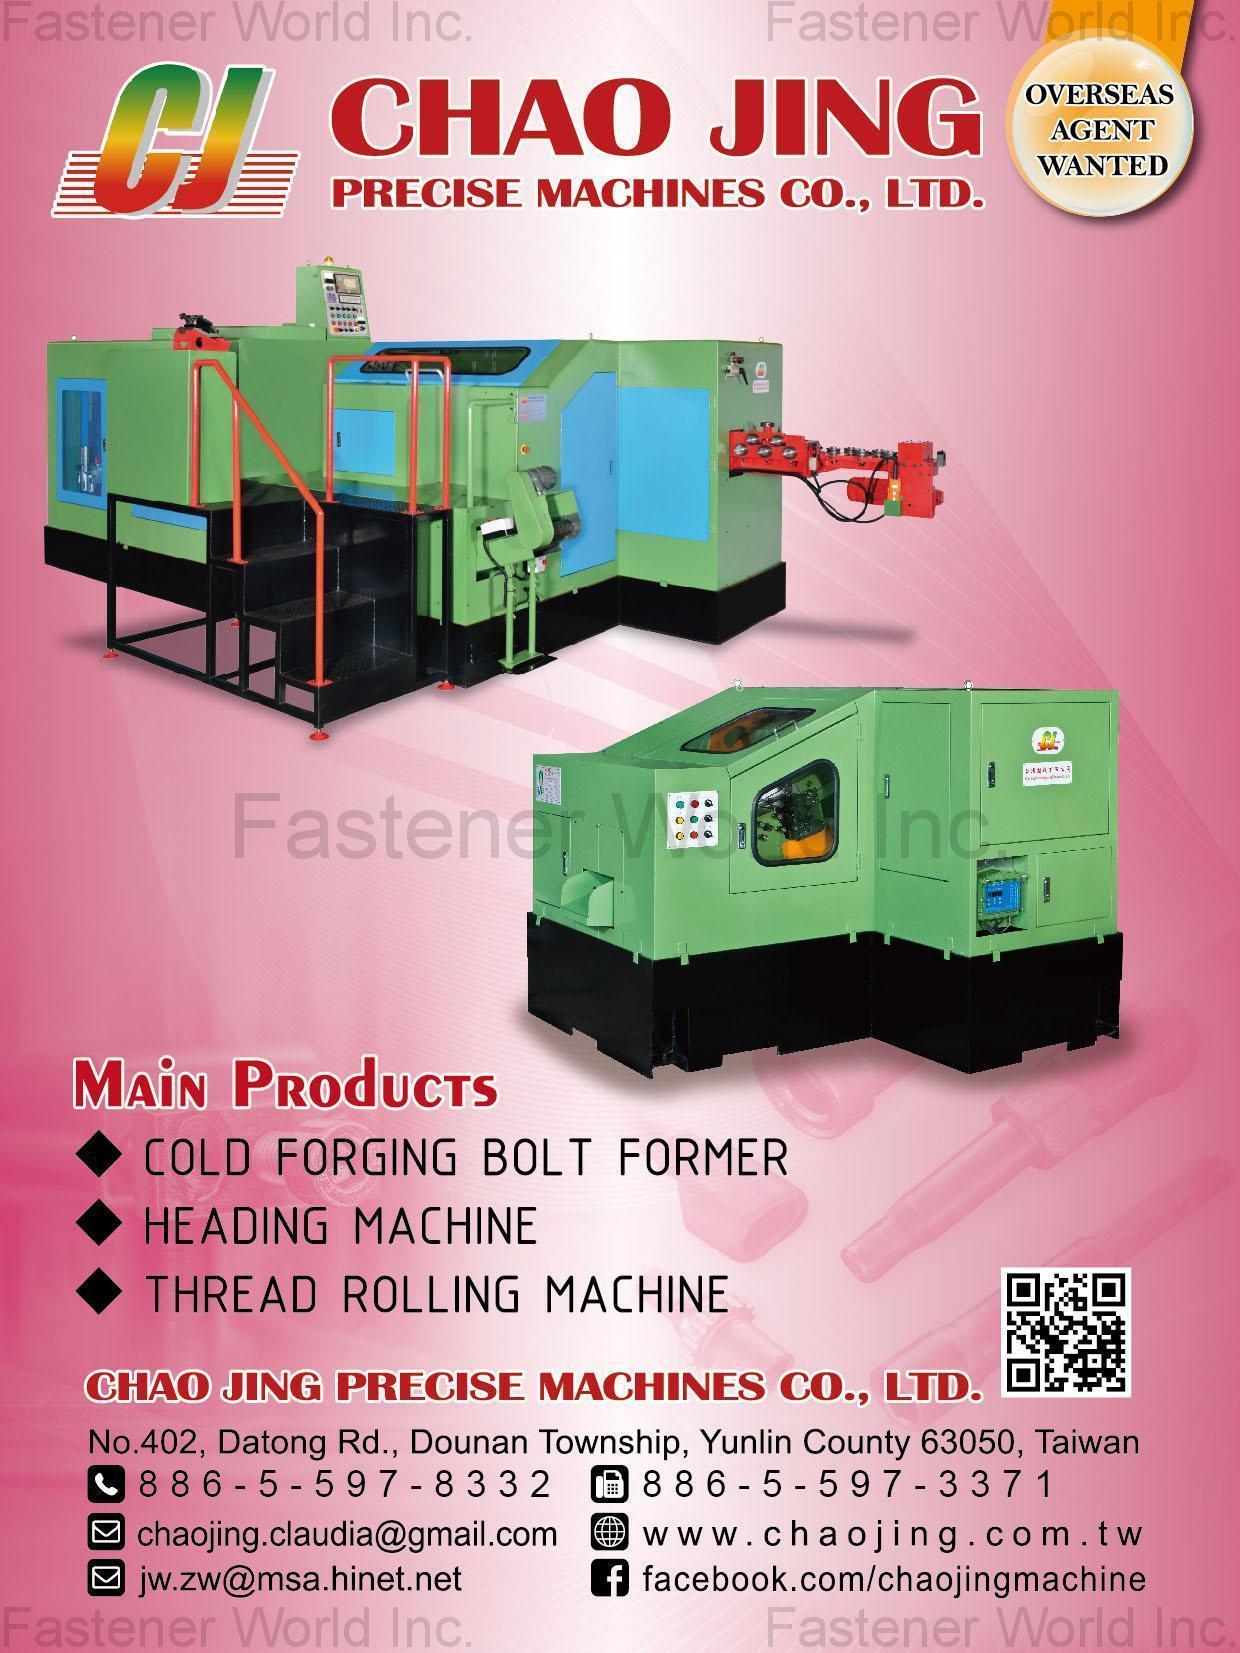 Chao Jing Precise Machines Enterprise Co., Ltd. (San Sing Screw Forming Machines) , Cold Forging Bolt Former, Heading Machine, Thread Rolling Machine , Heading Machine